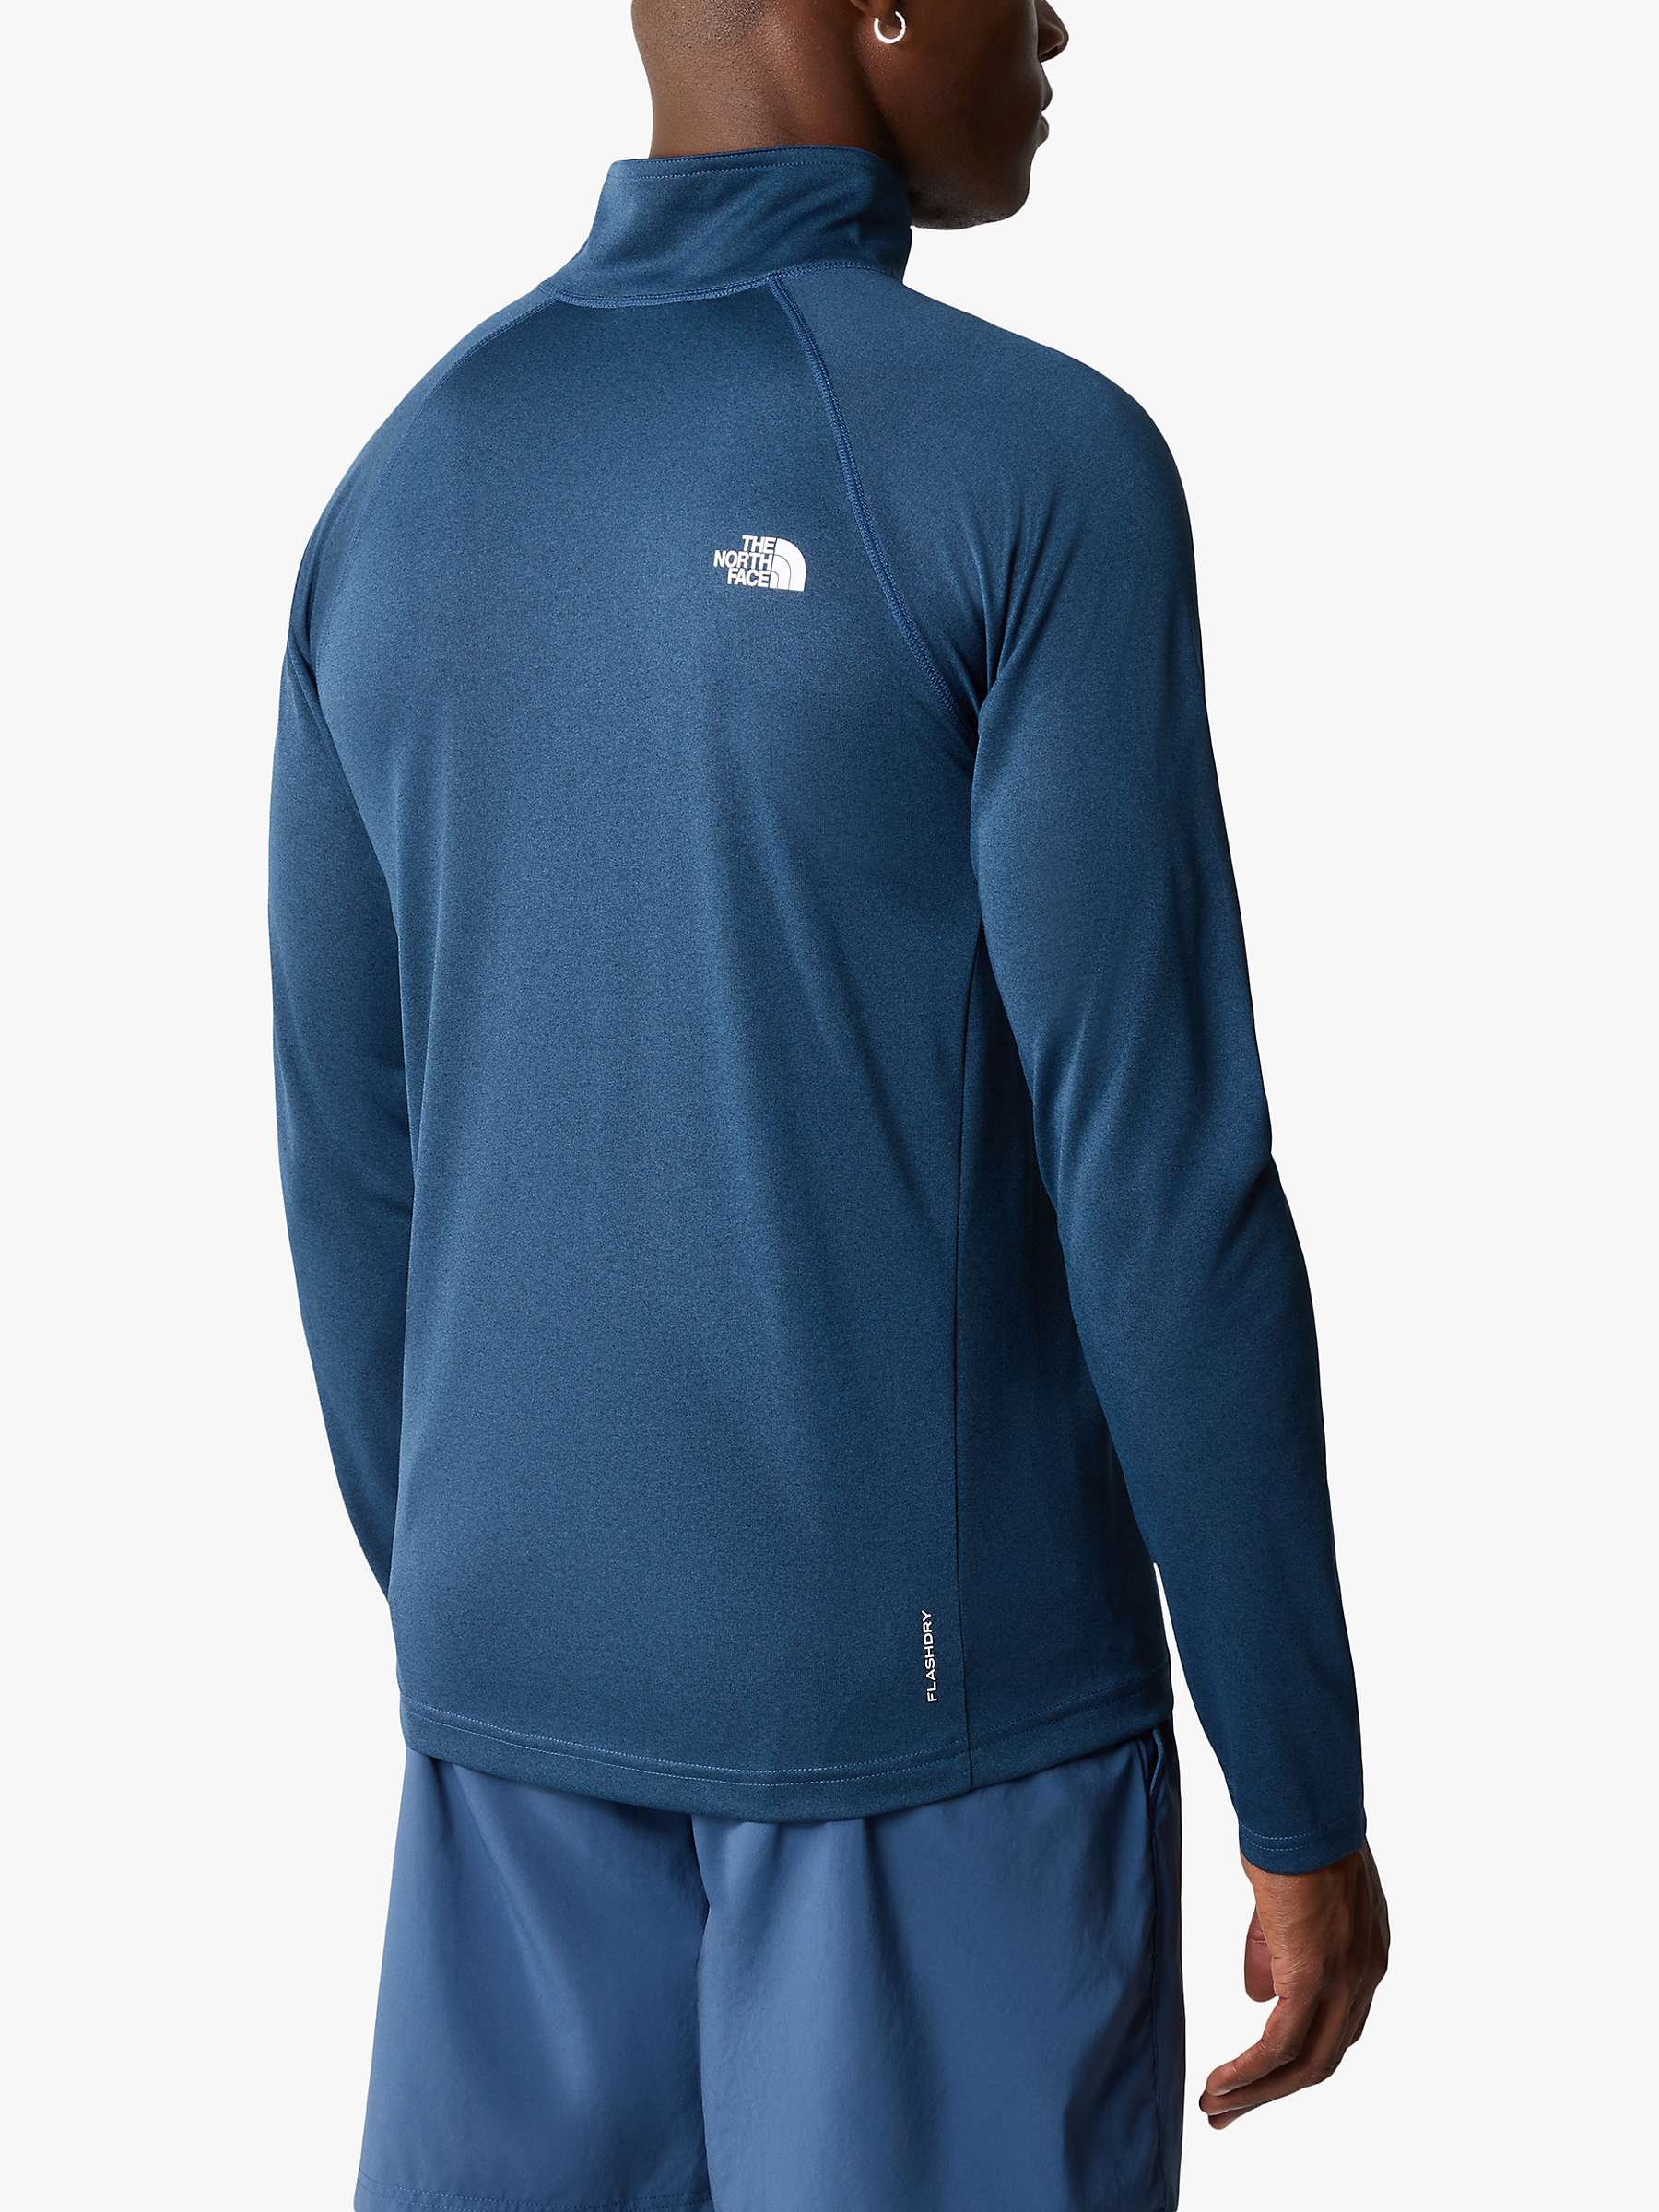 Buy The North Face Flex II 1/4 Zip Long Sleeve T-Shirt, Blue Online at johnlewis.com